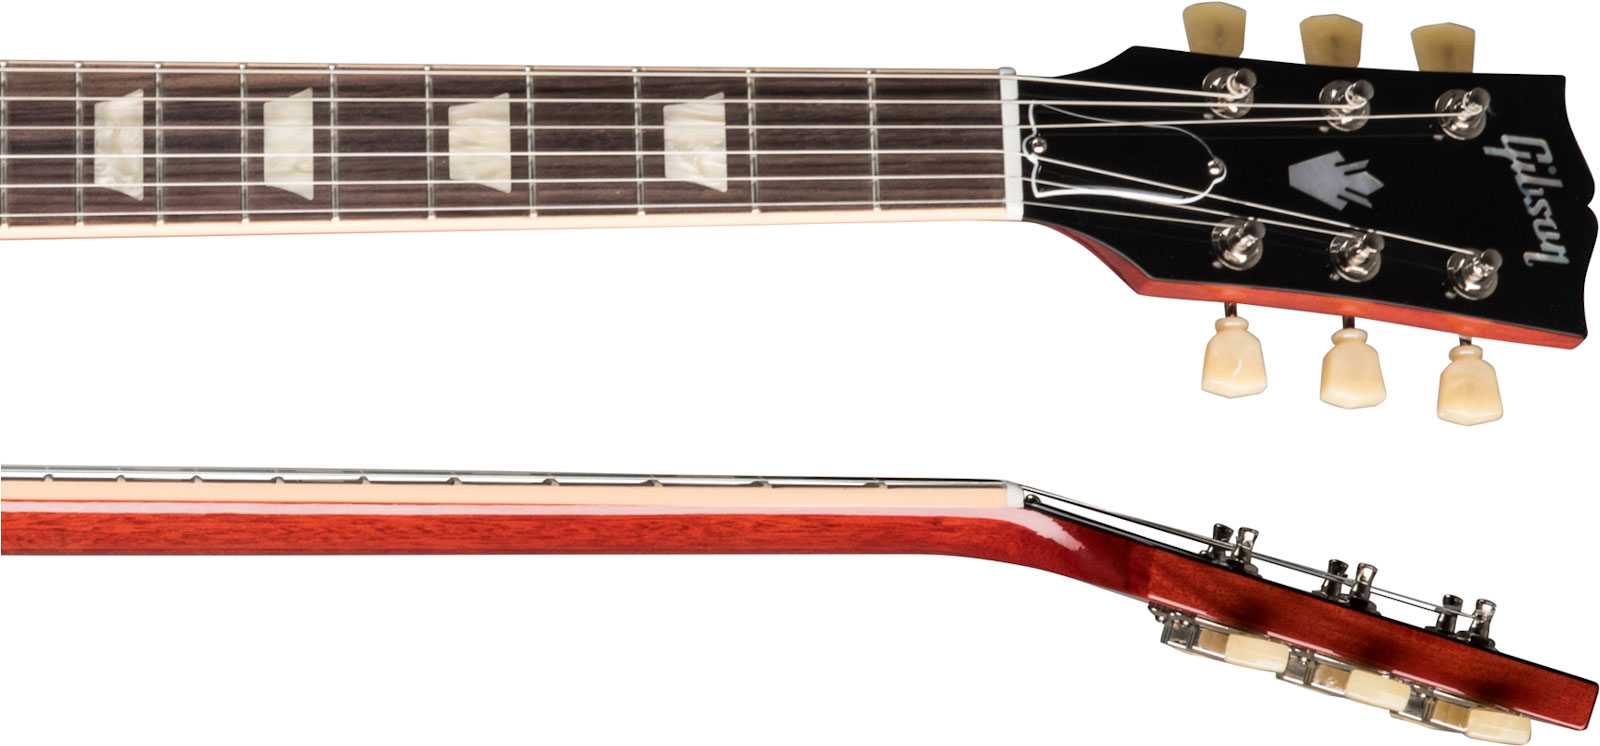 Gibson Sg Standard '61 Maestro Vibrola Original 2h Trem Rw - Retro rock electric guitar - Variation 2